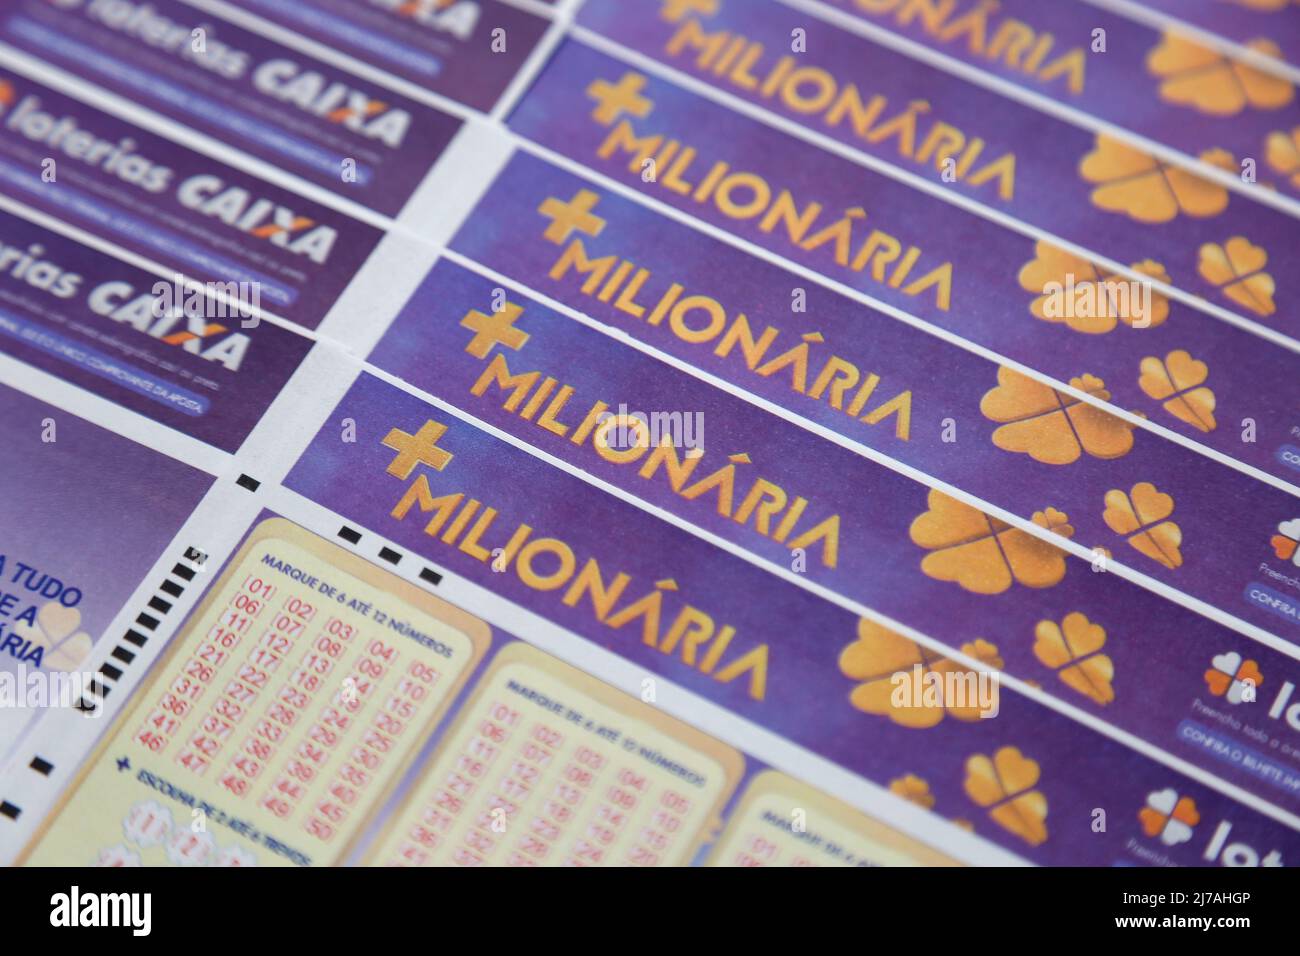 Minas Gerais, Brazil - May 05, 2022: Mais Milionaria Caixa lottery tickets Stock Photo